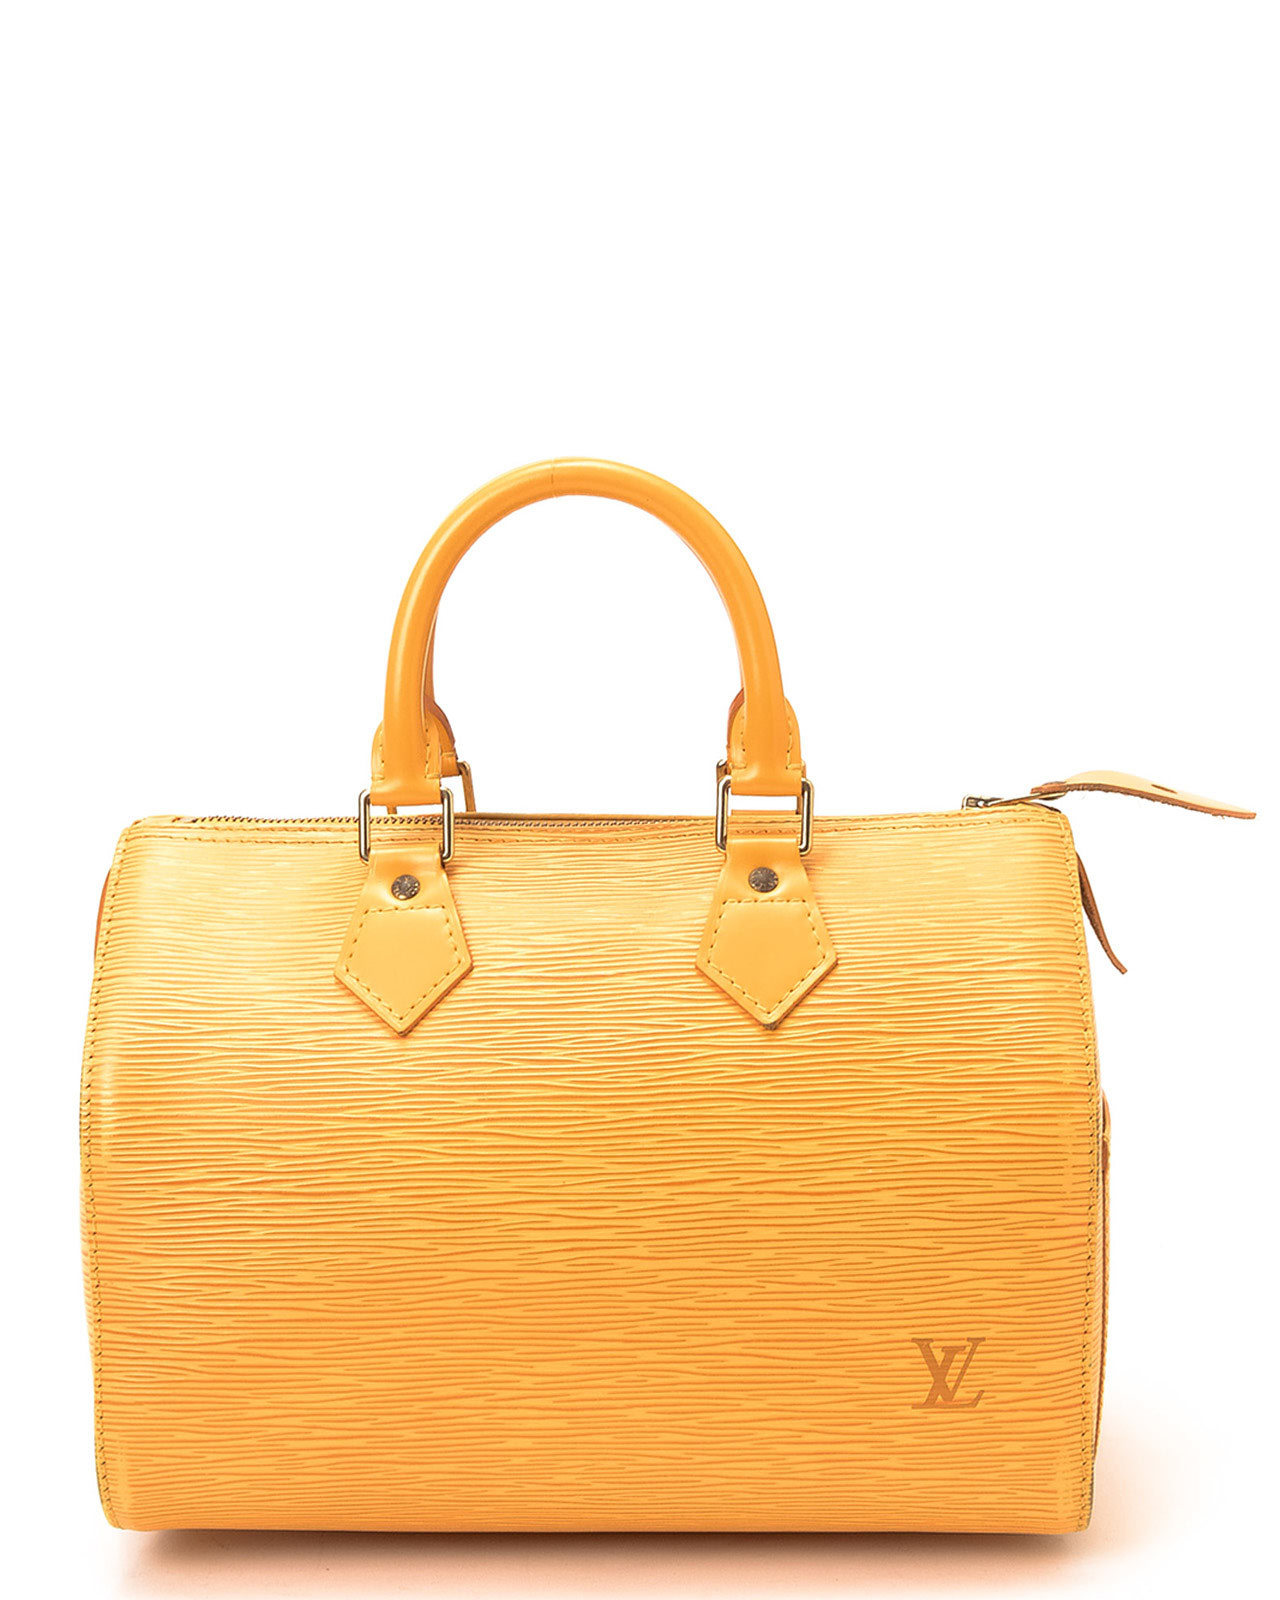 Louis Vuitton Yellow Speedy 25 Handbag in Yellow | Lyst